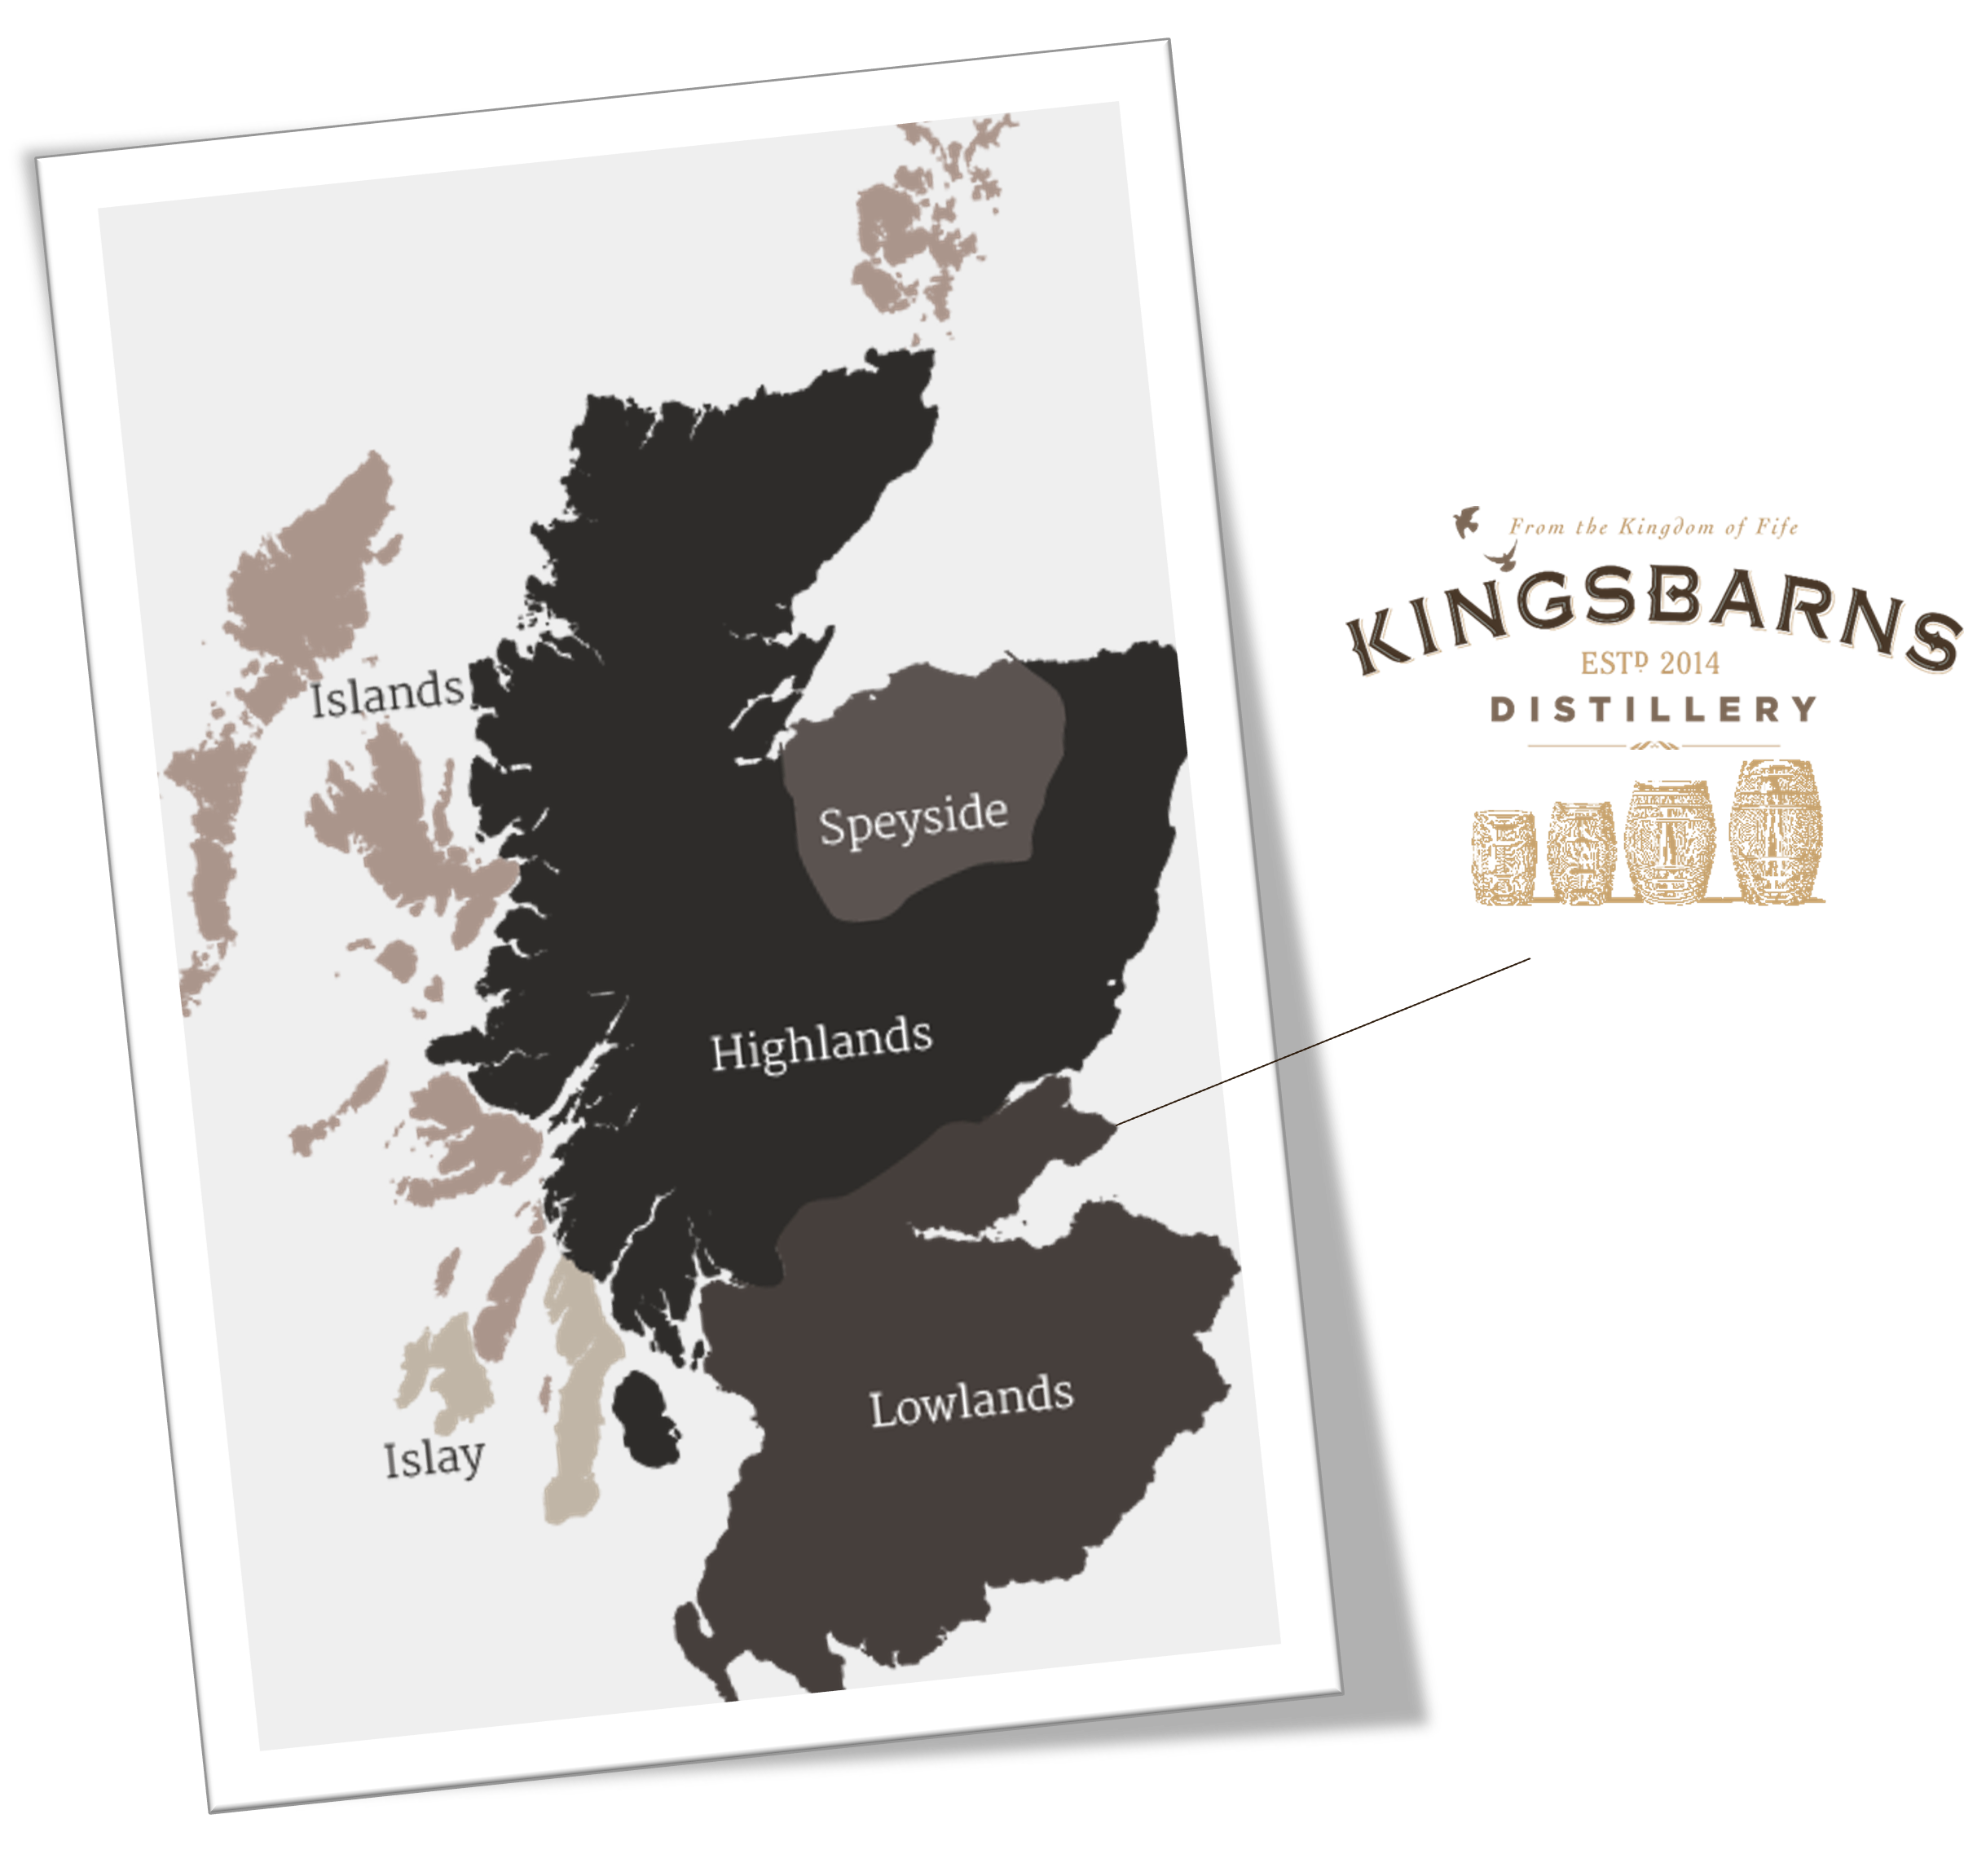 Scotland_map